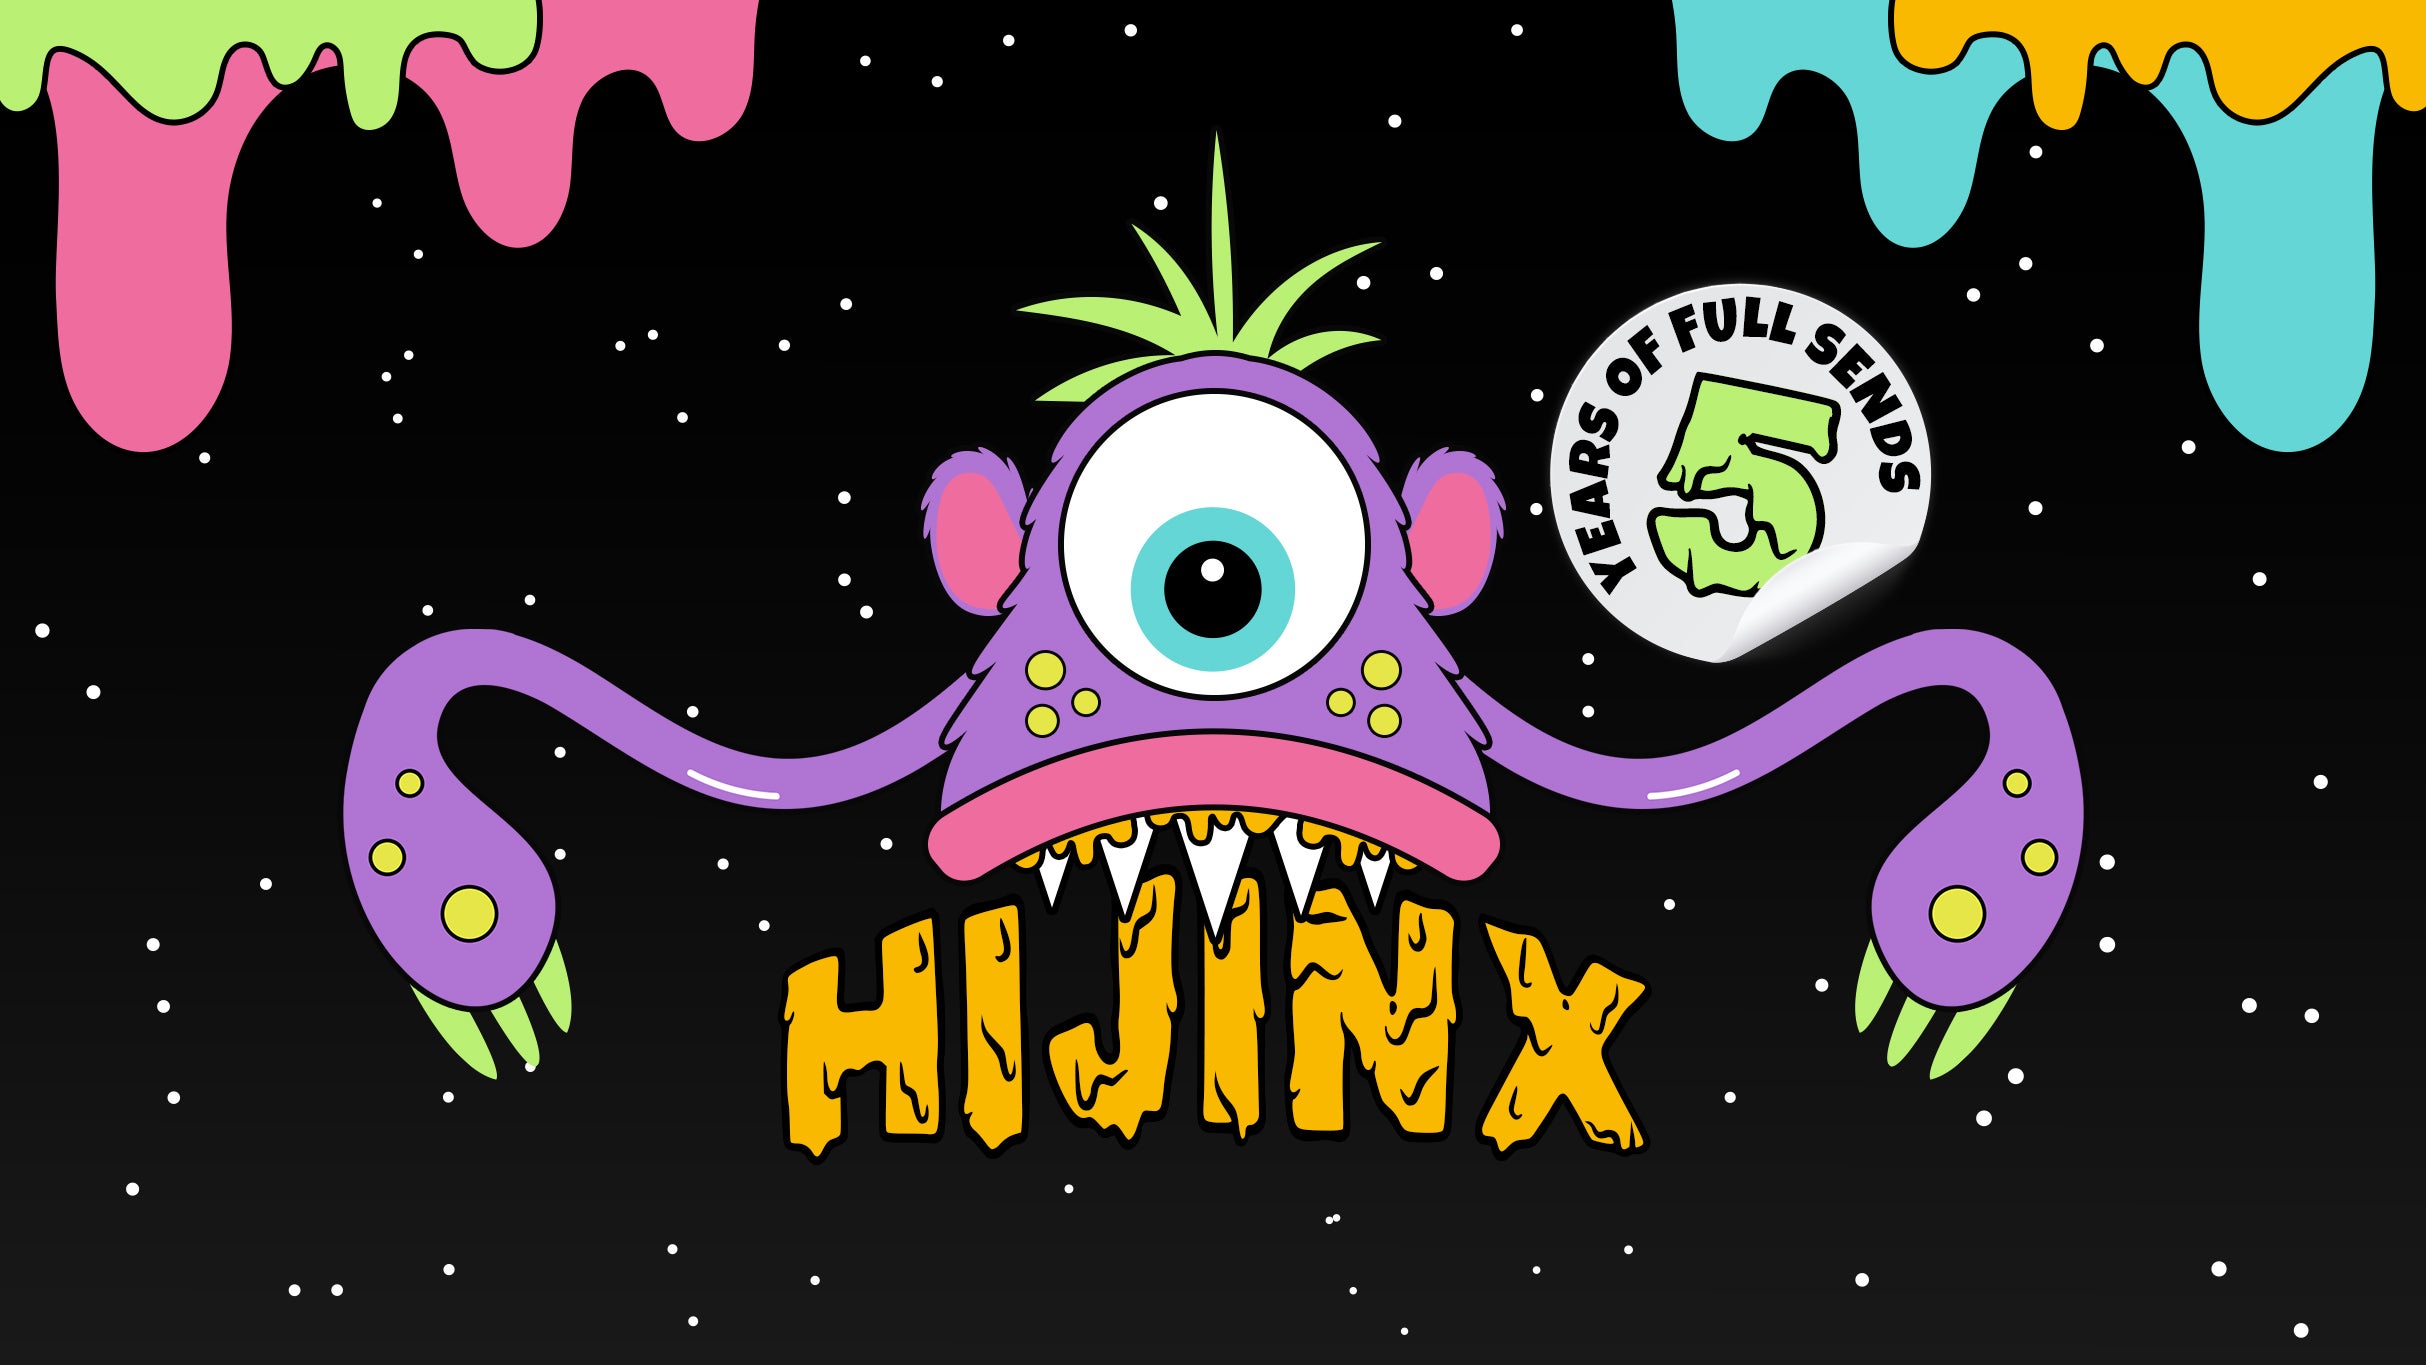 HiJinx free presale code for show tickets in Philadelphia, PA (Pennsylvania Convention Center)